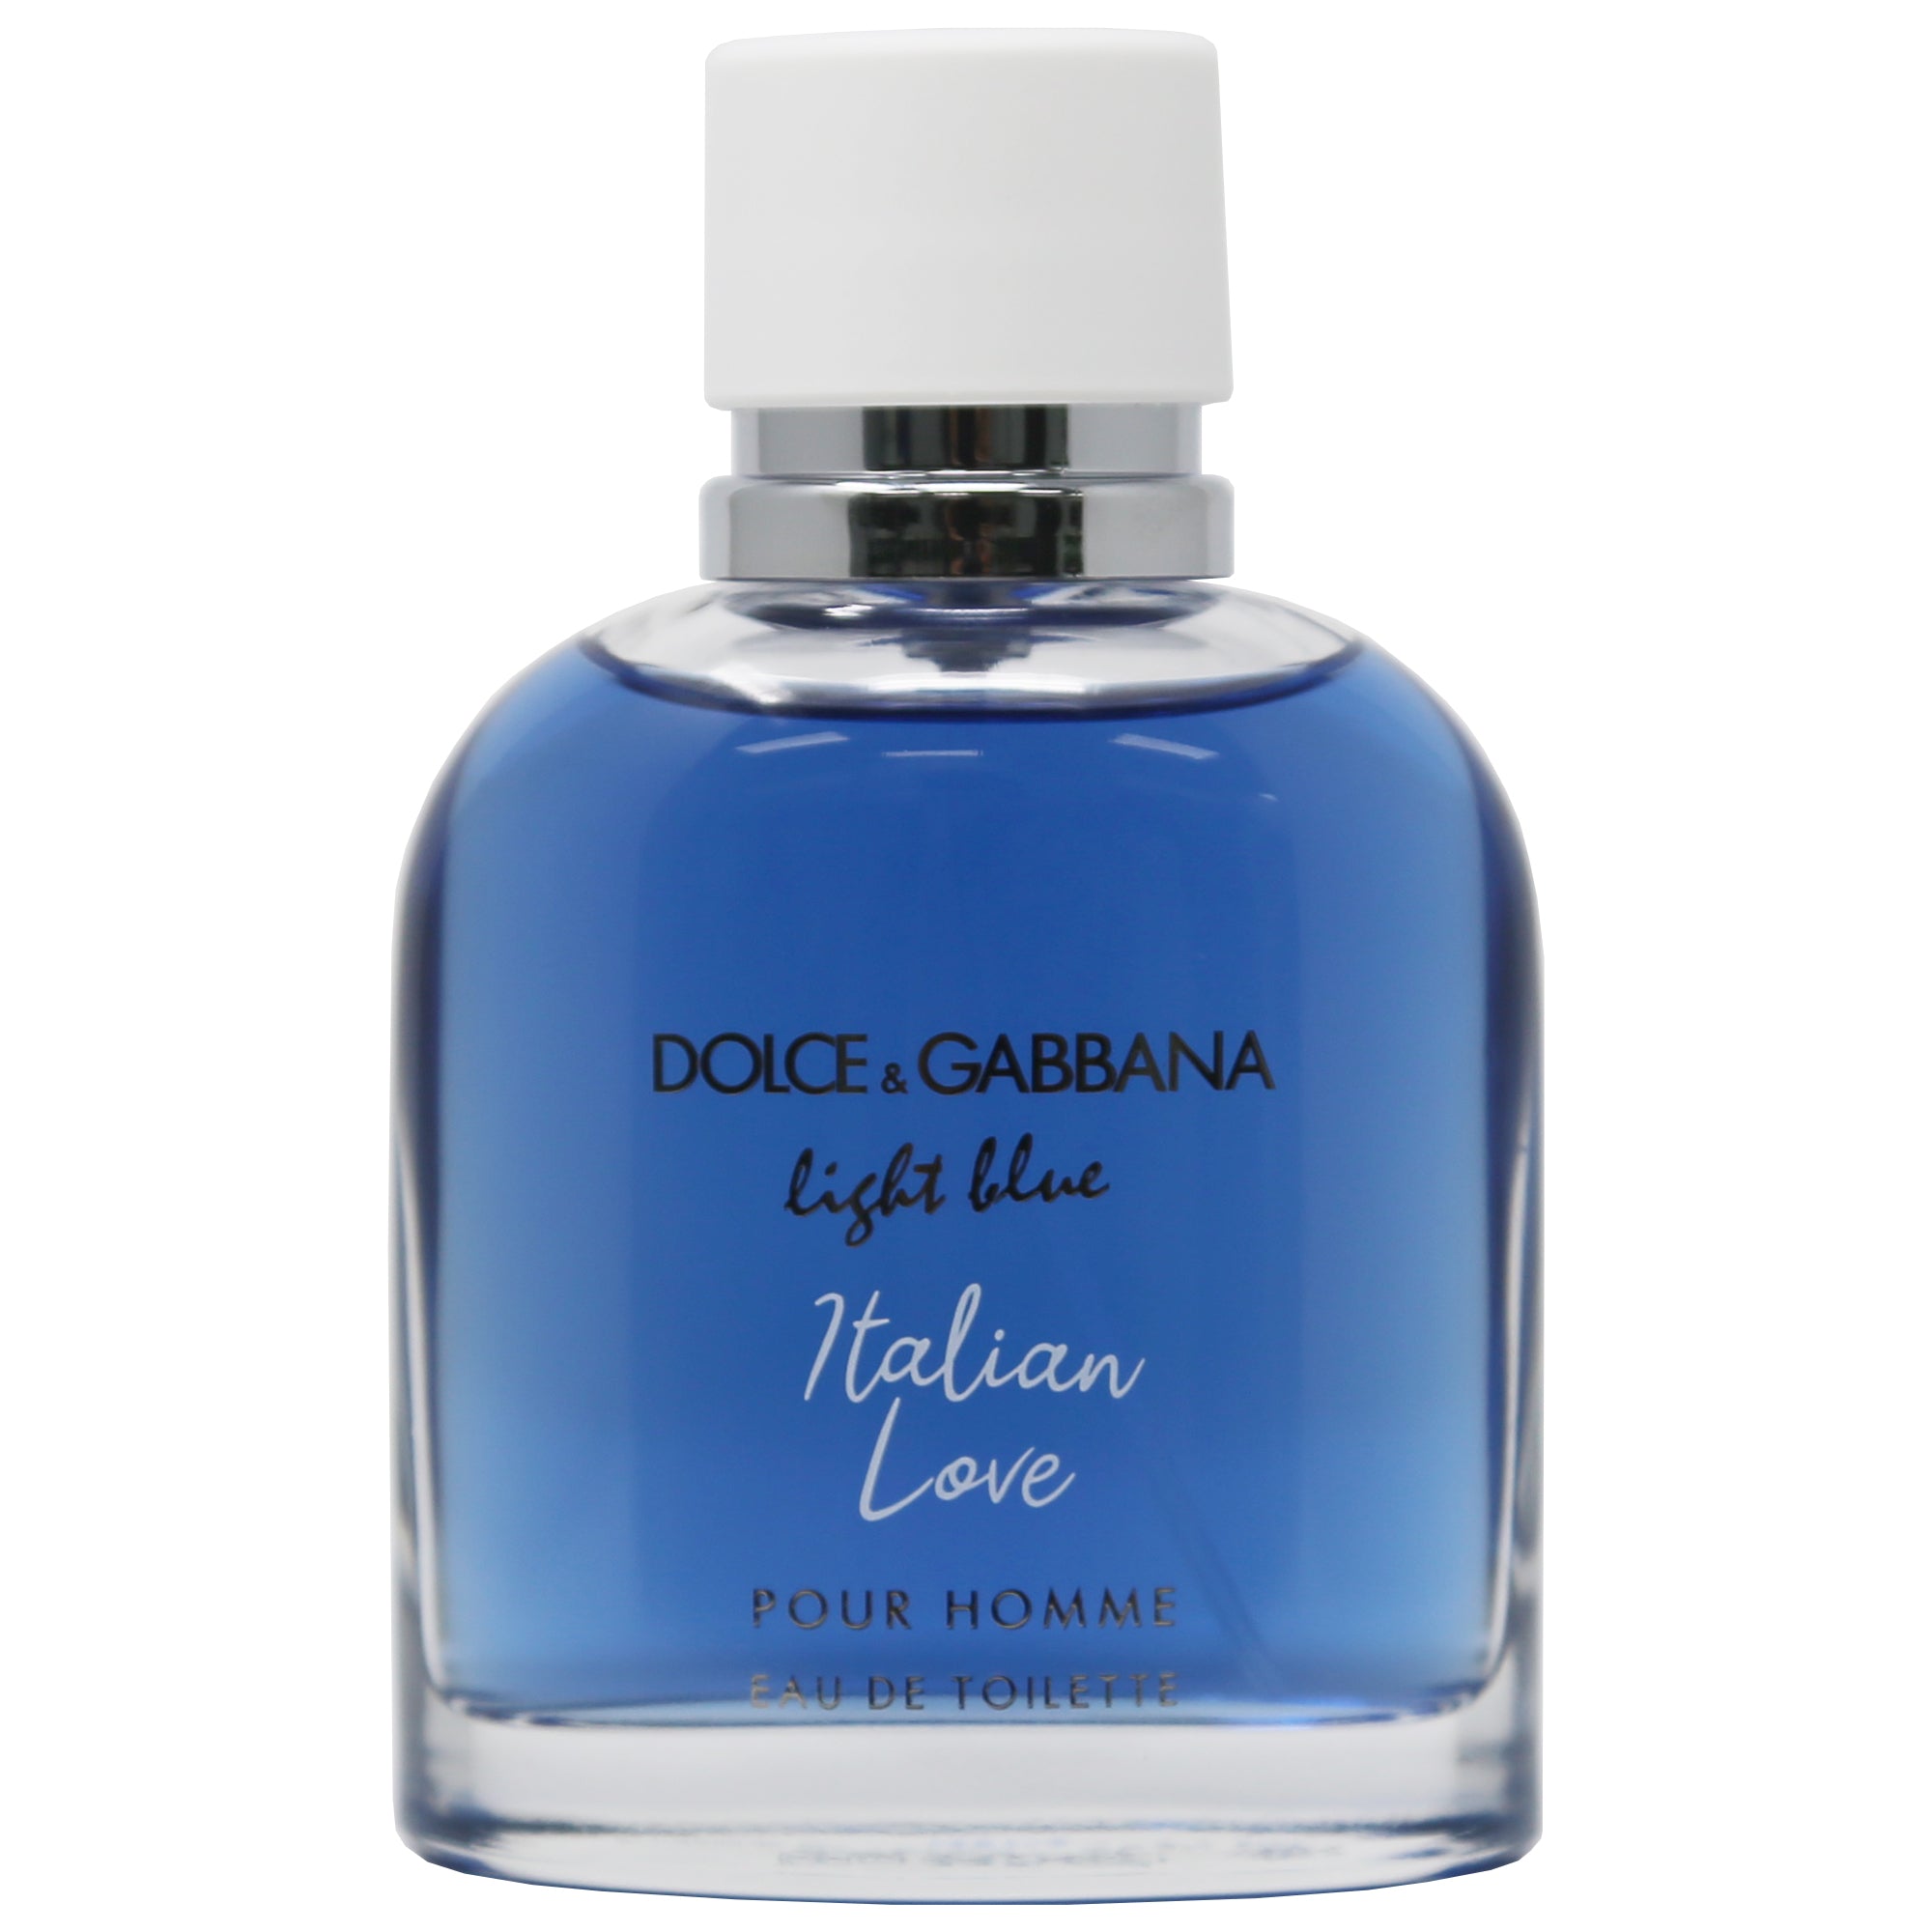 Light Blue Eau Intense Pour Homme by Dolce&Gabbana Fragrance Samples, DecantX